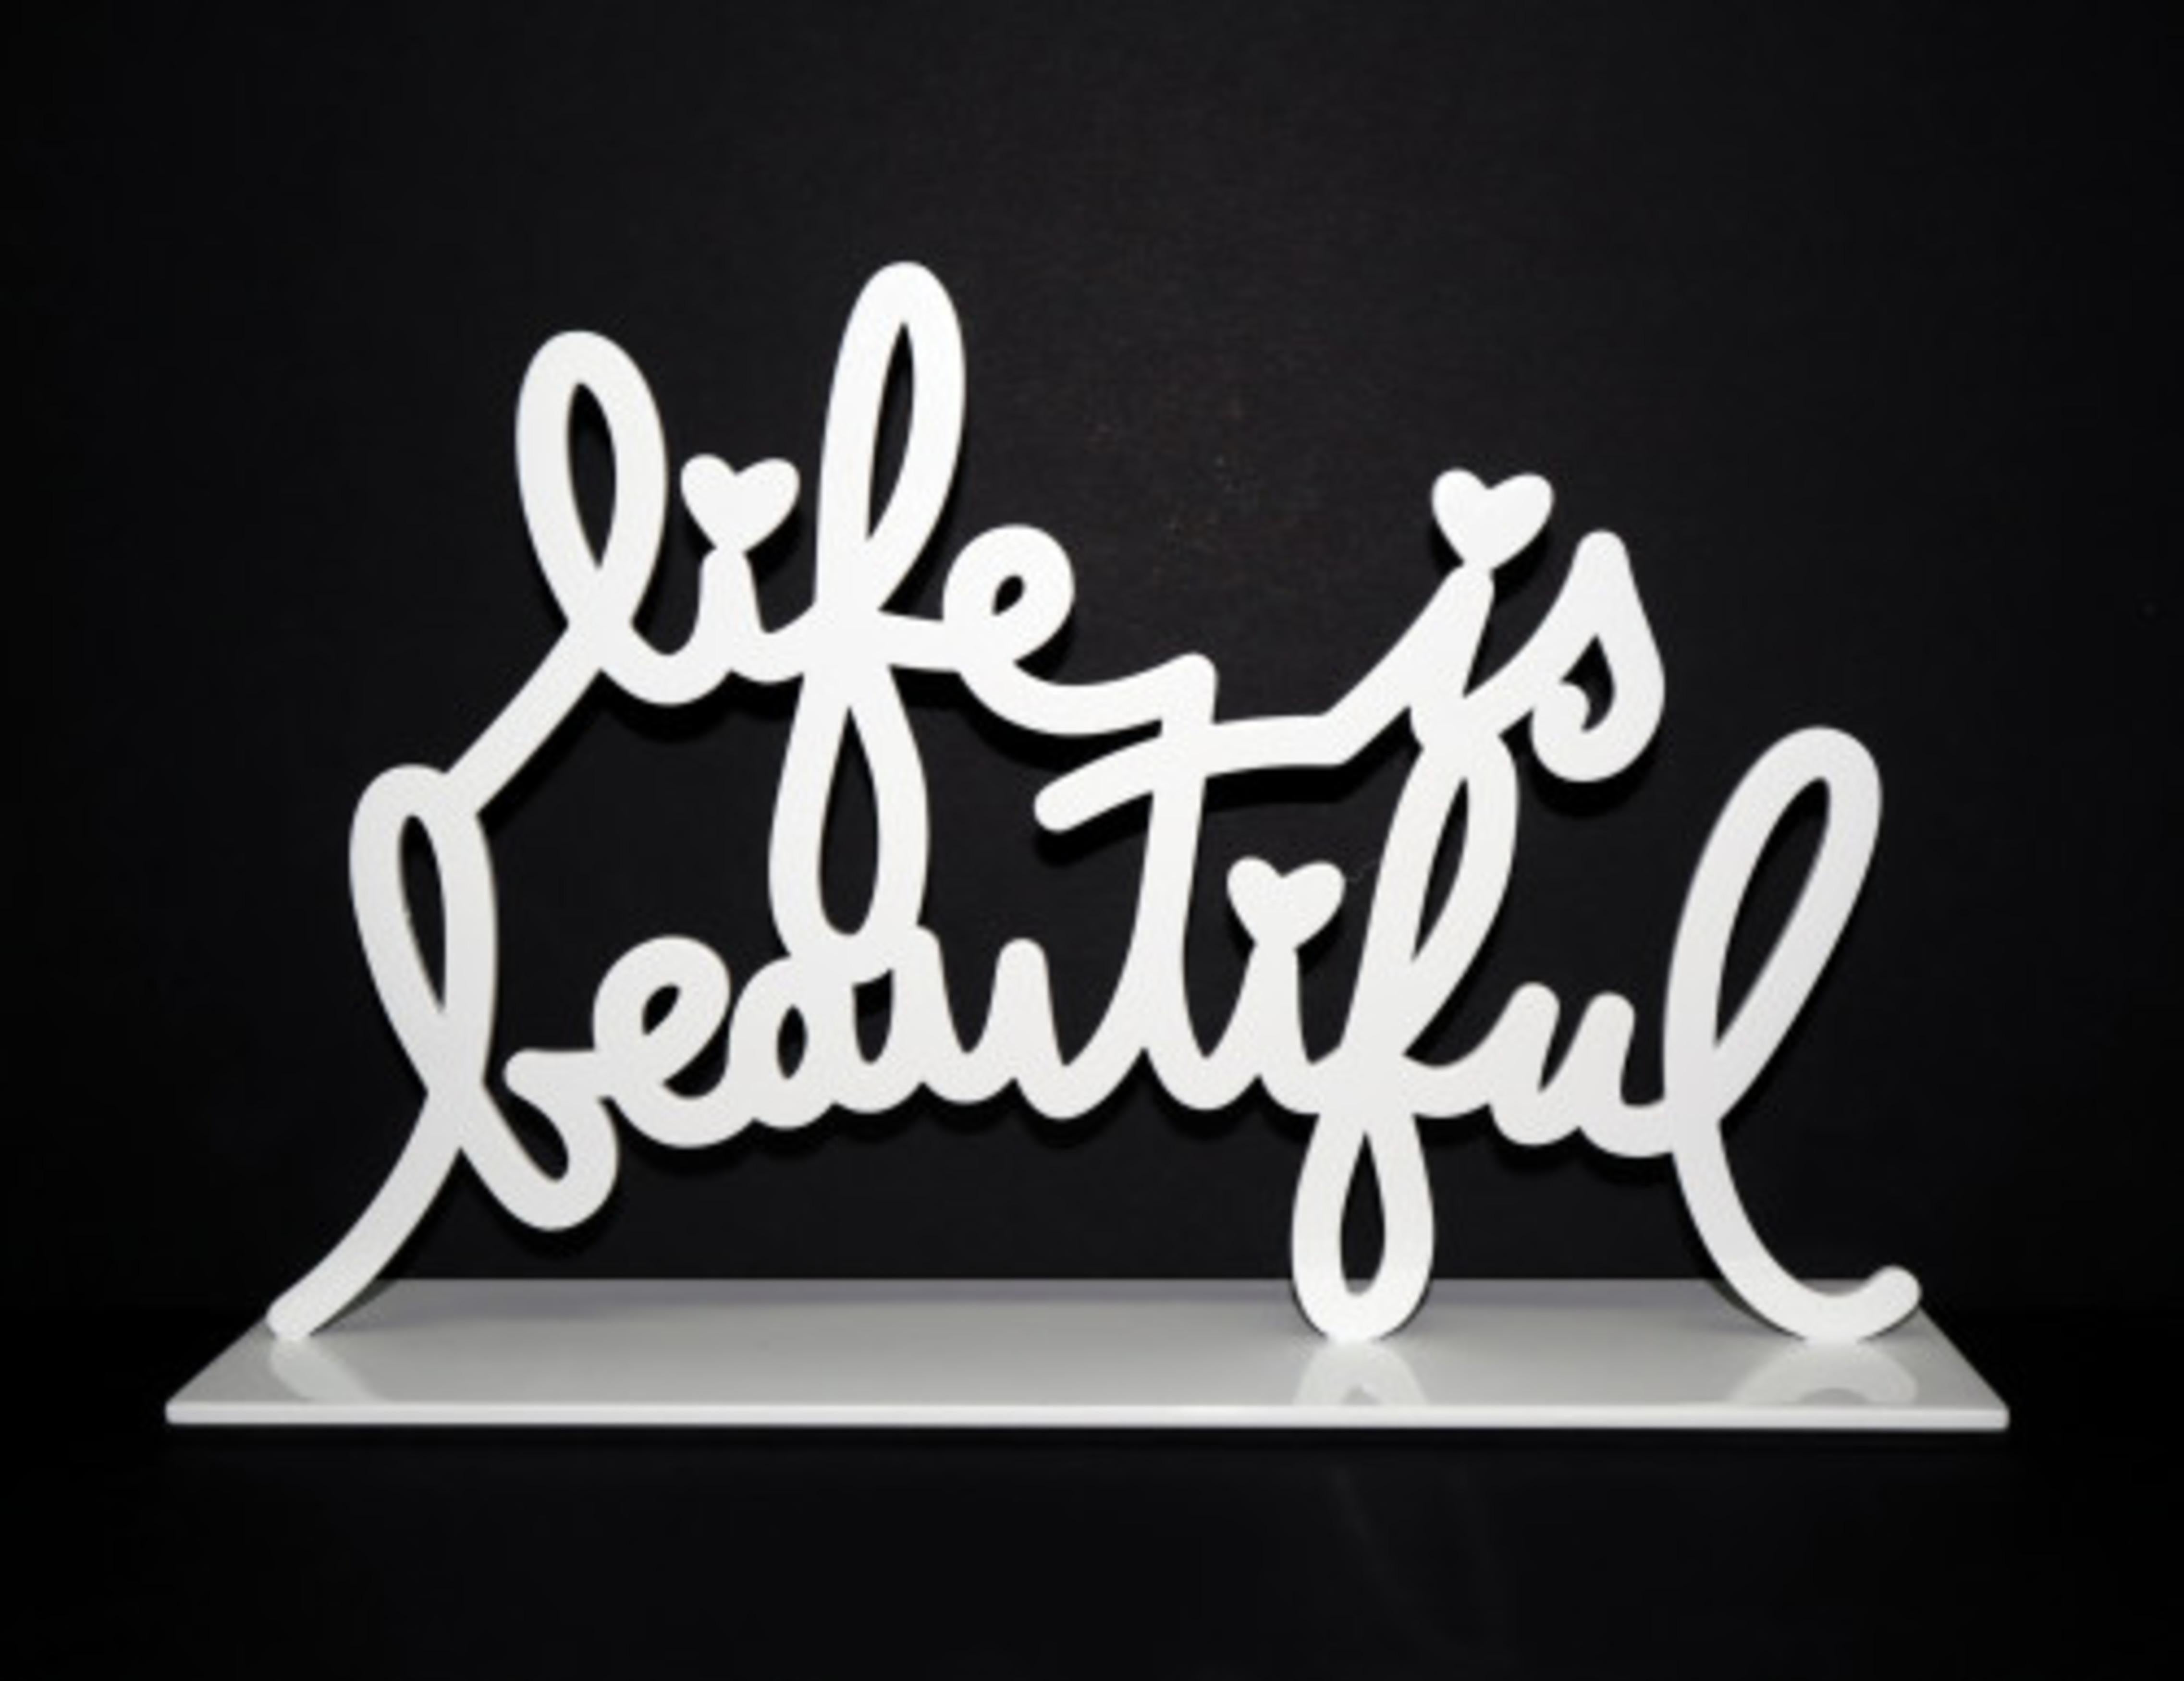 Life is Beautiful III (White) - Sculpture by Mr. Brainwash